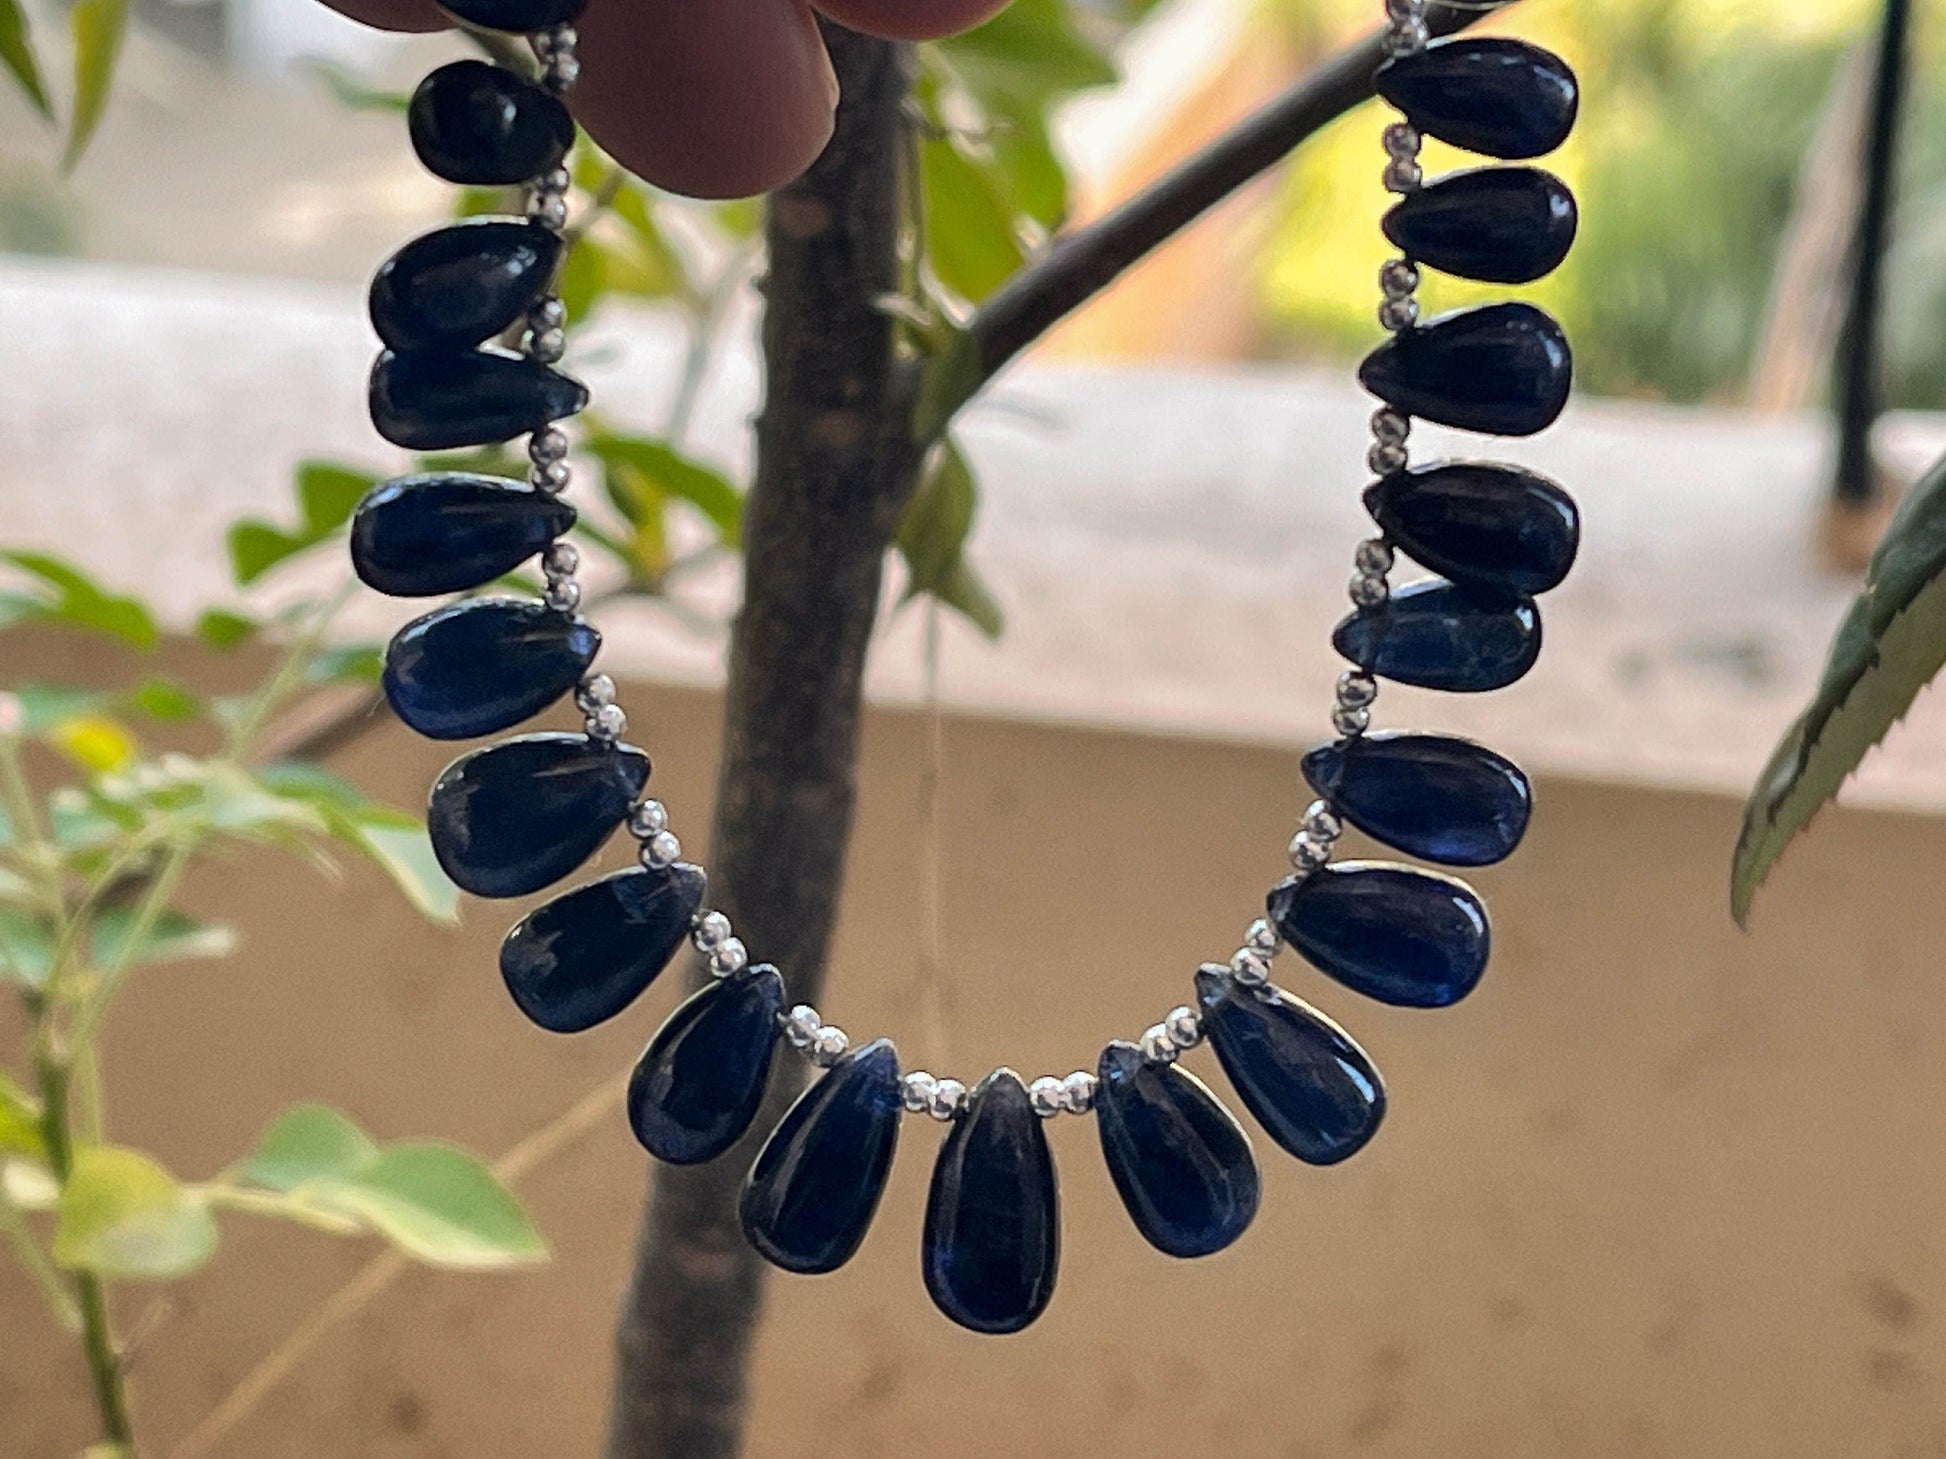 30 Pieces Burma Blue Sapphire Teardrops (No Treatment) Beadsforyourjewelry